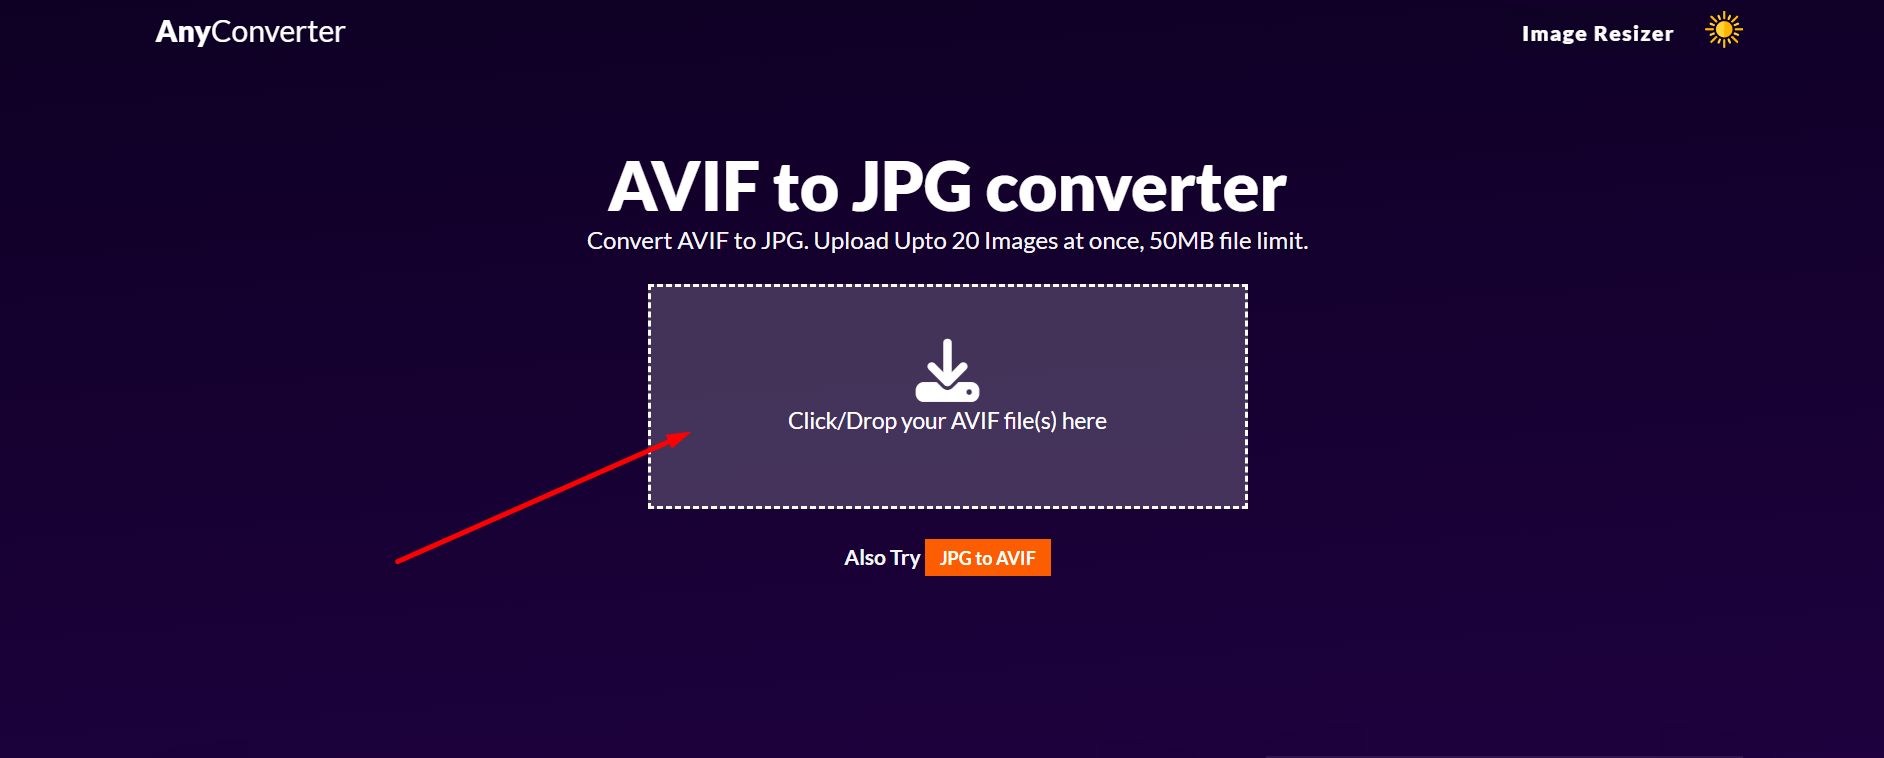 AVIF to JPG Converter